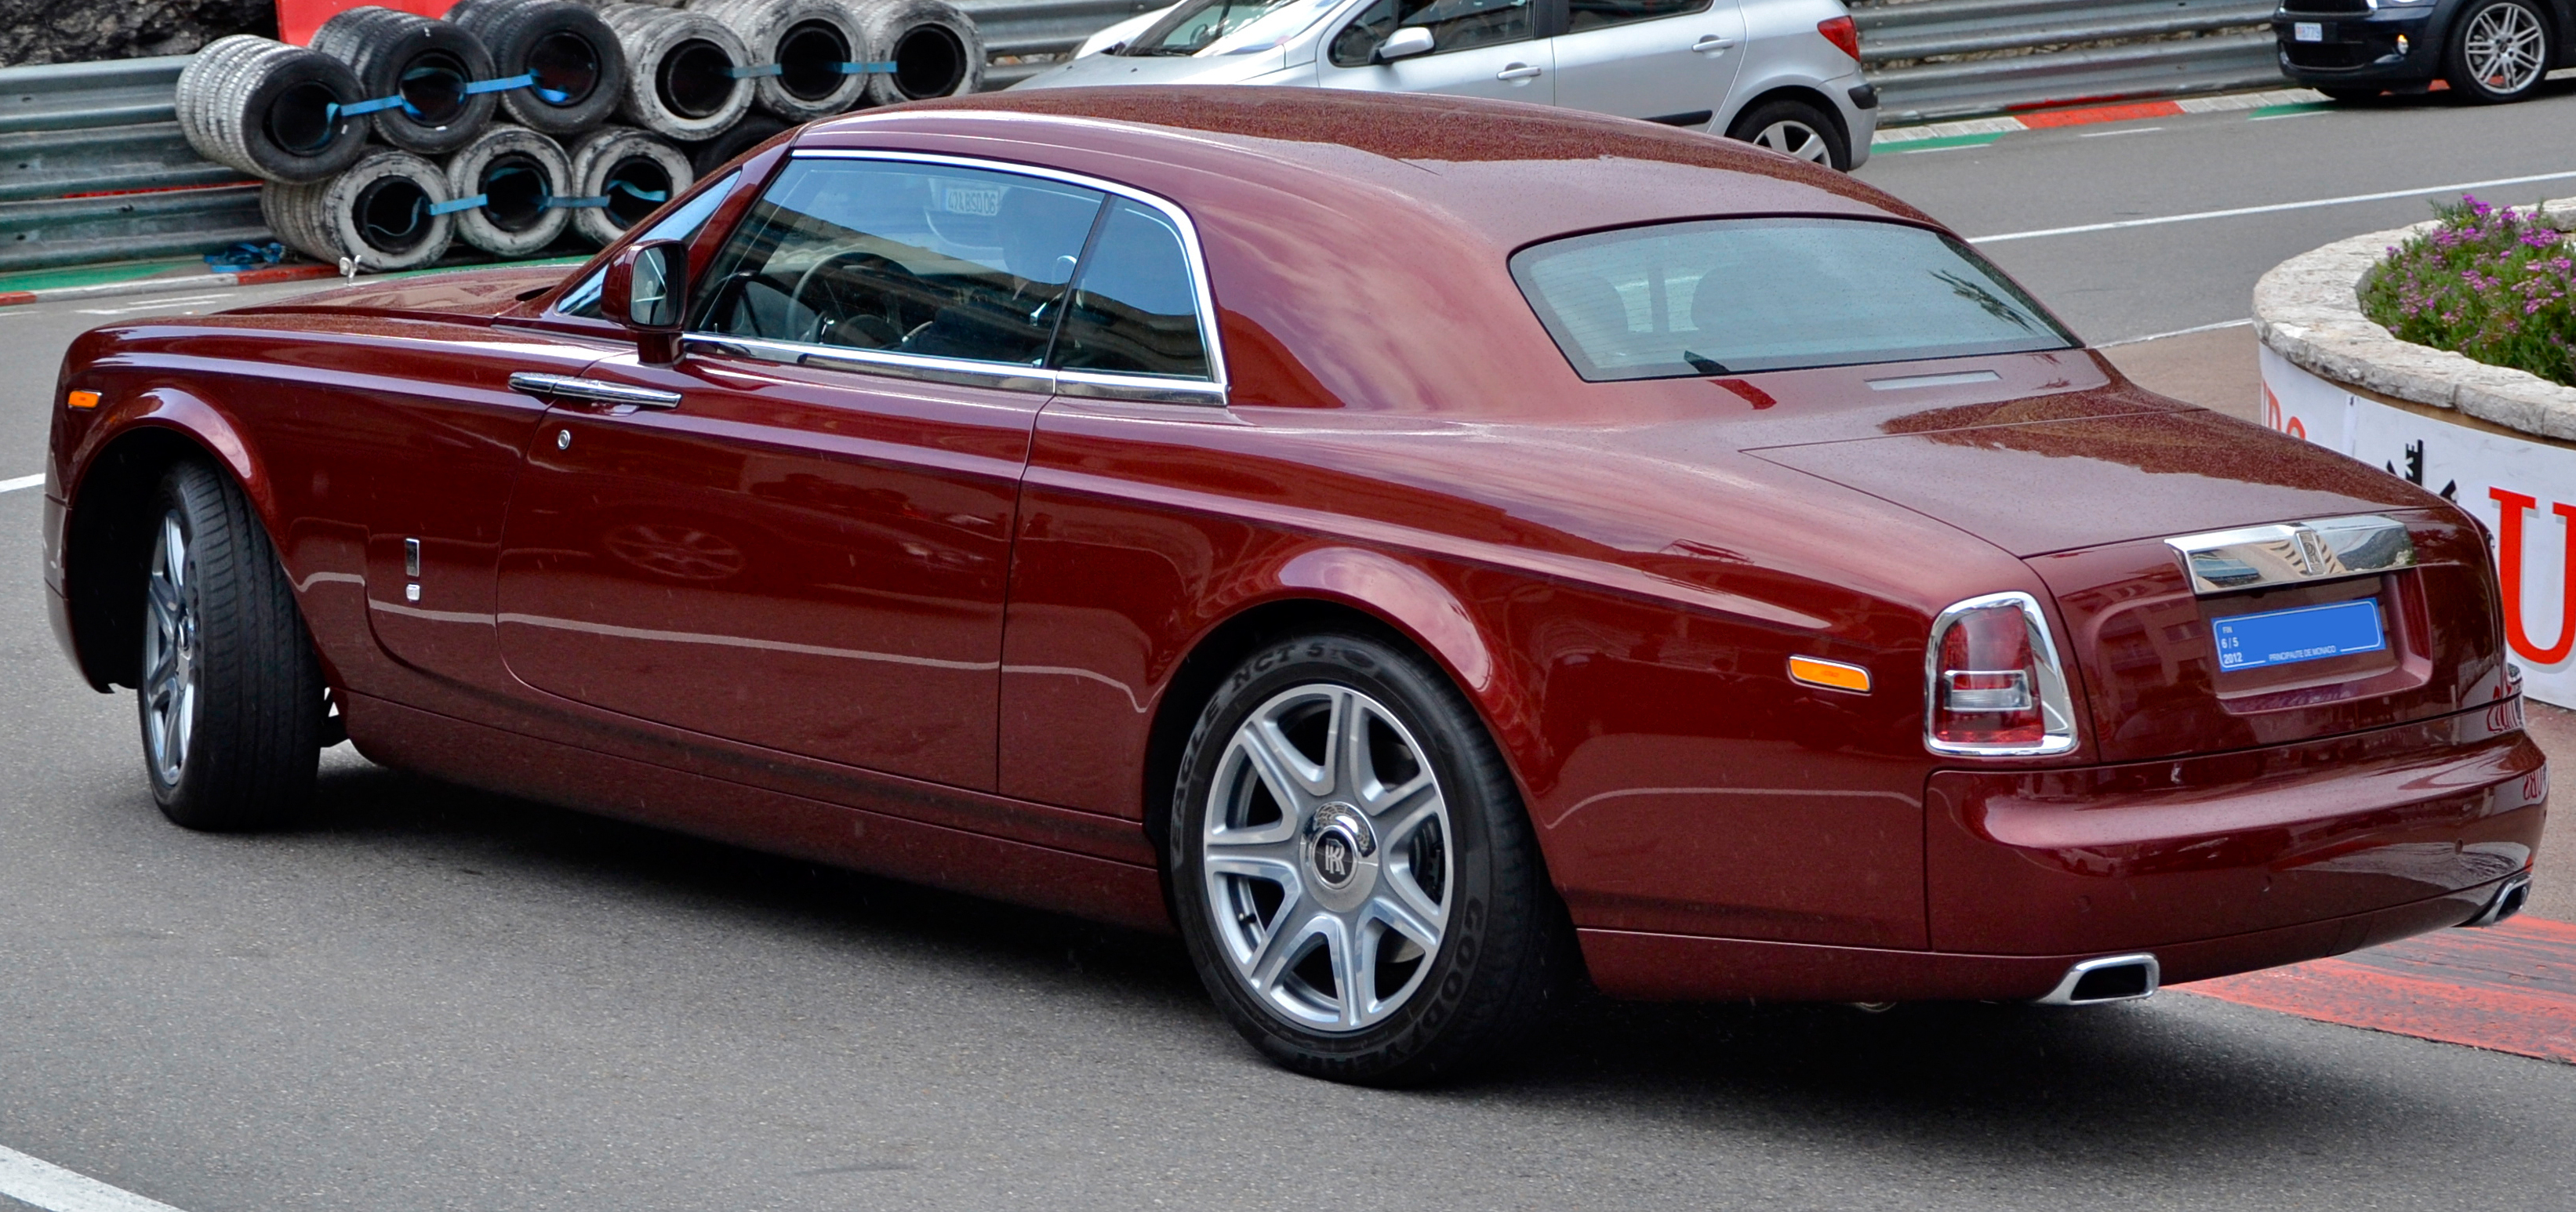 File:Rolls Royce Phantom Coupe - Flickr - Alexandre Prévot (2)  (cropped).jpg - Wikimedia Commons